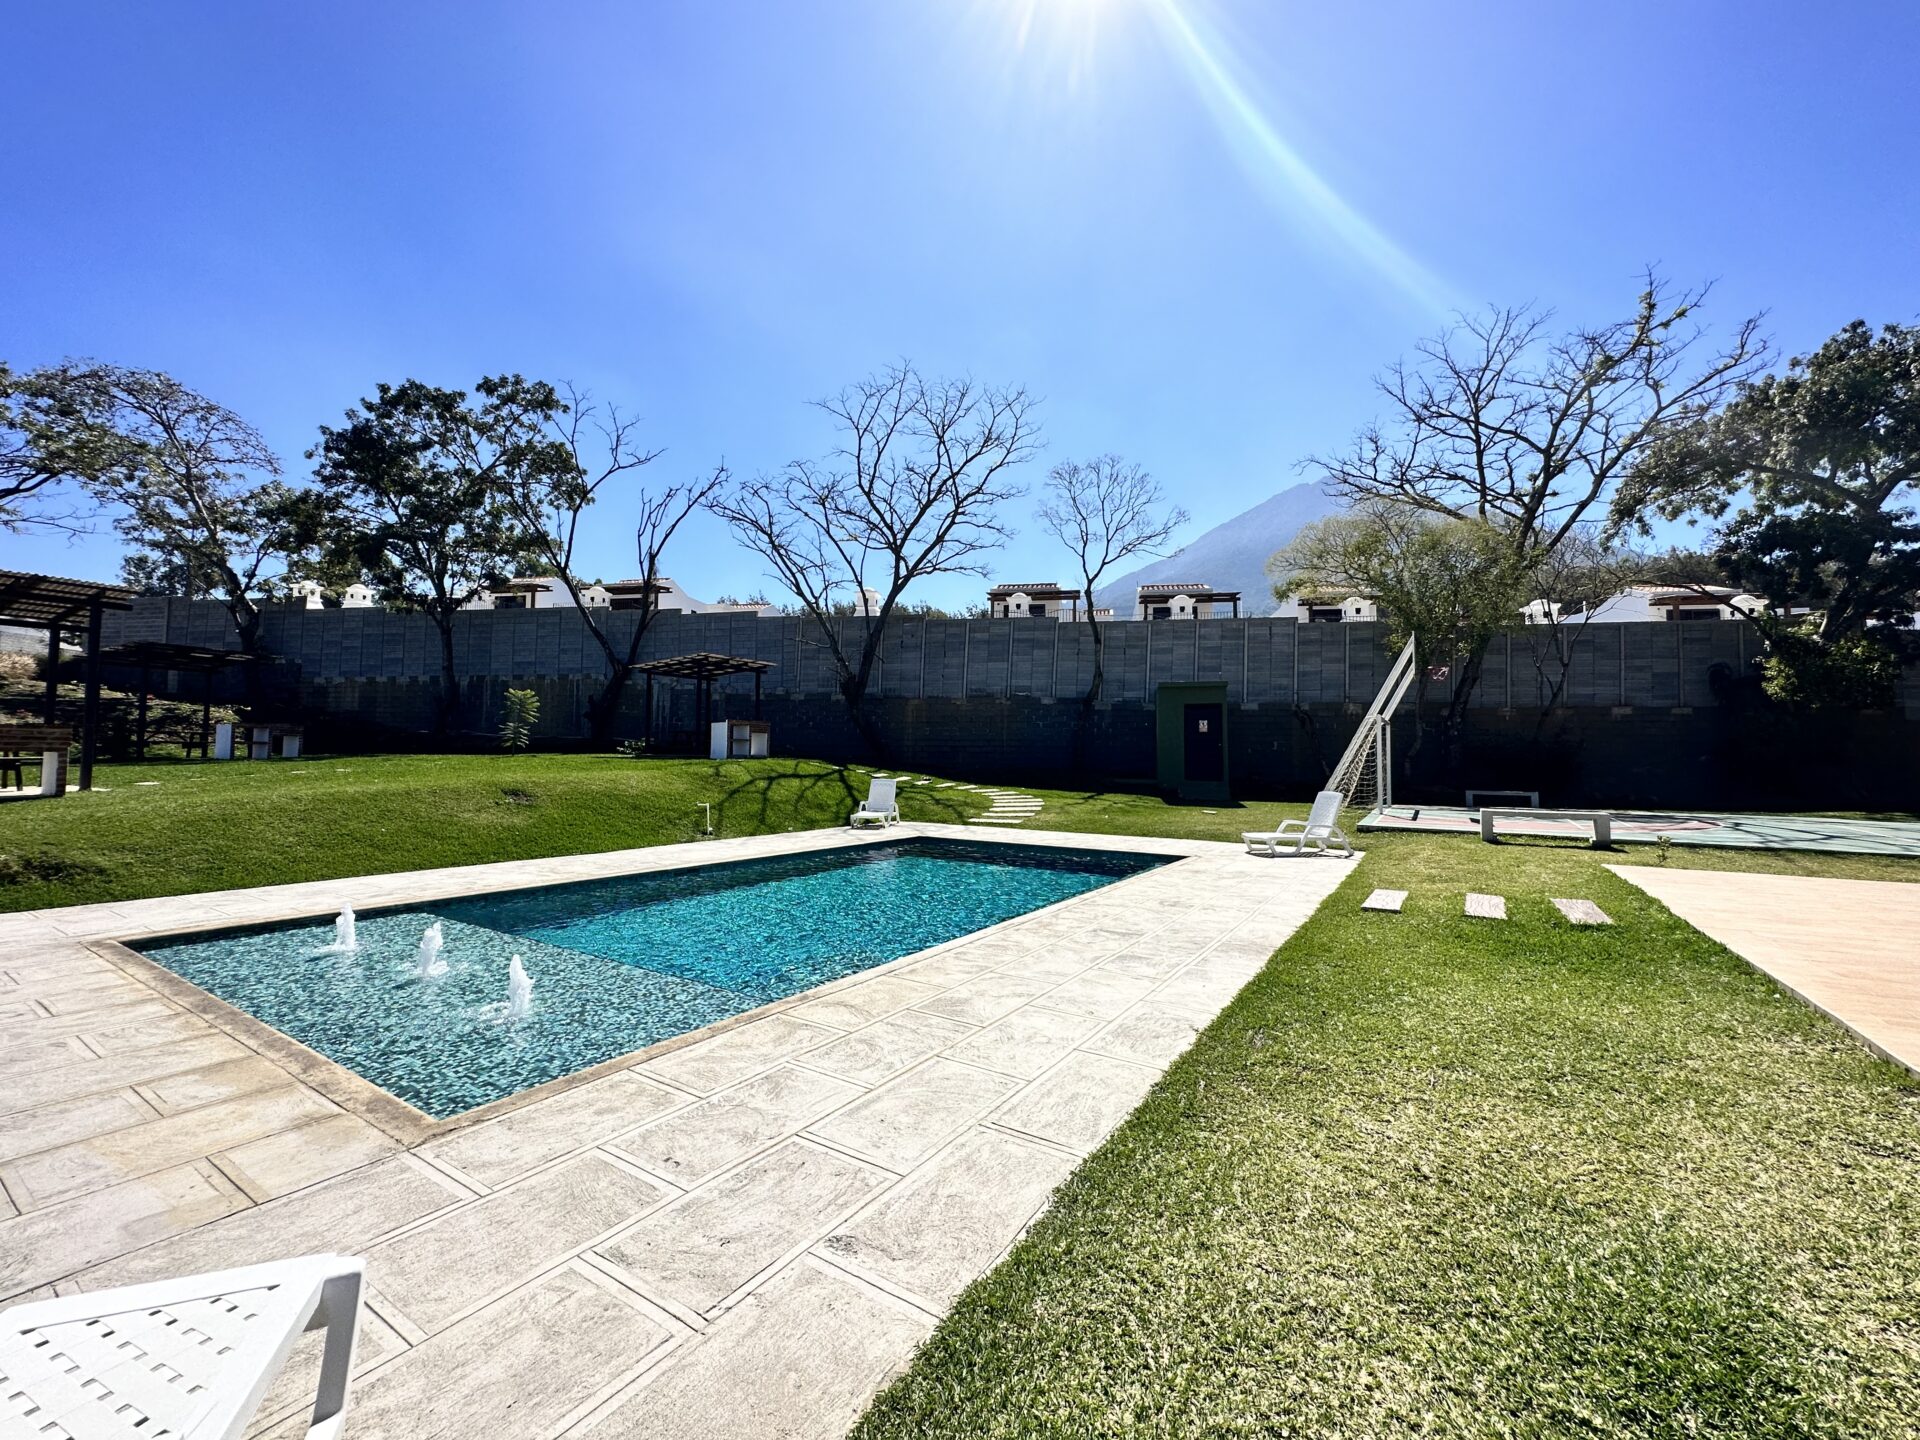 Casa en alquiler en Antigua Guatemala, en condominio con piscina